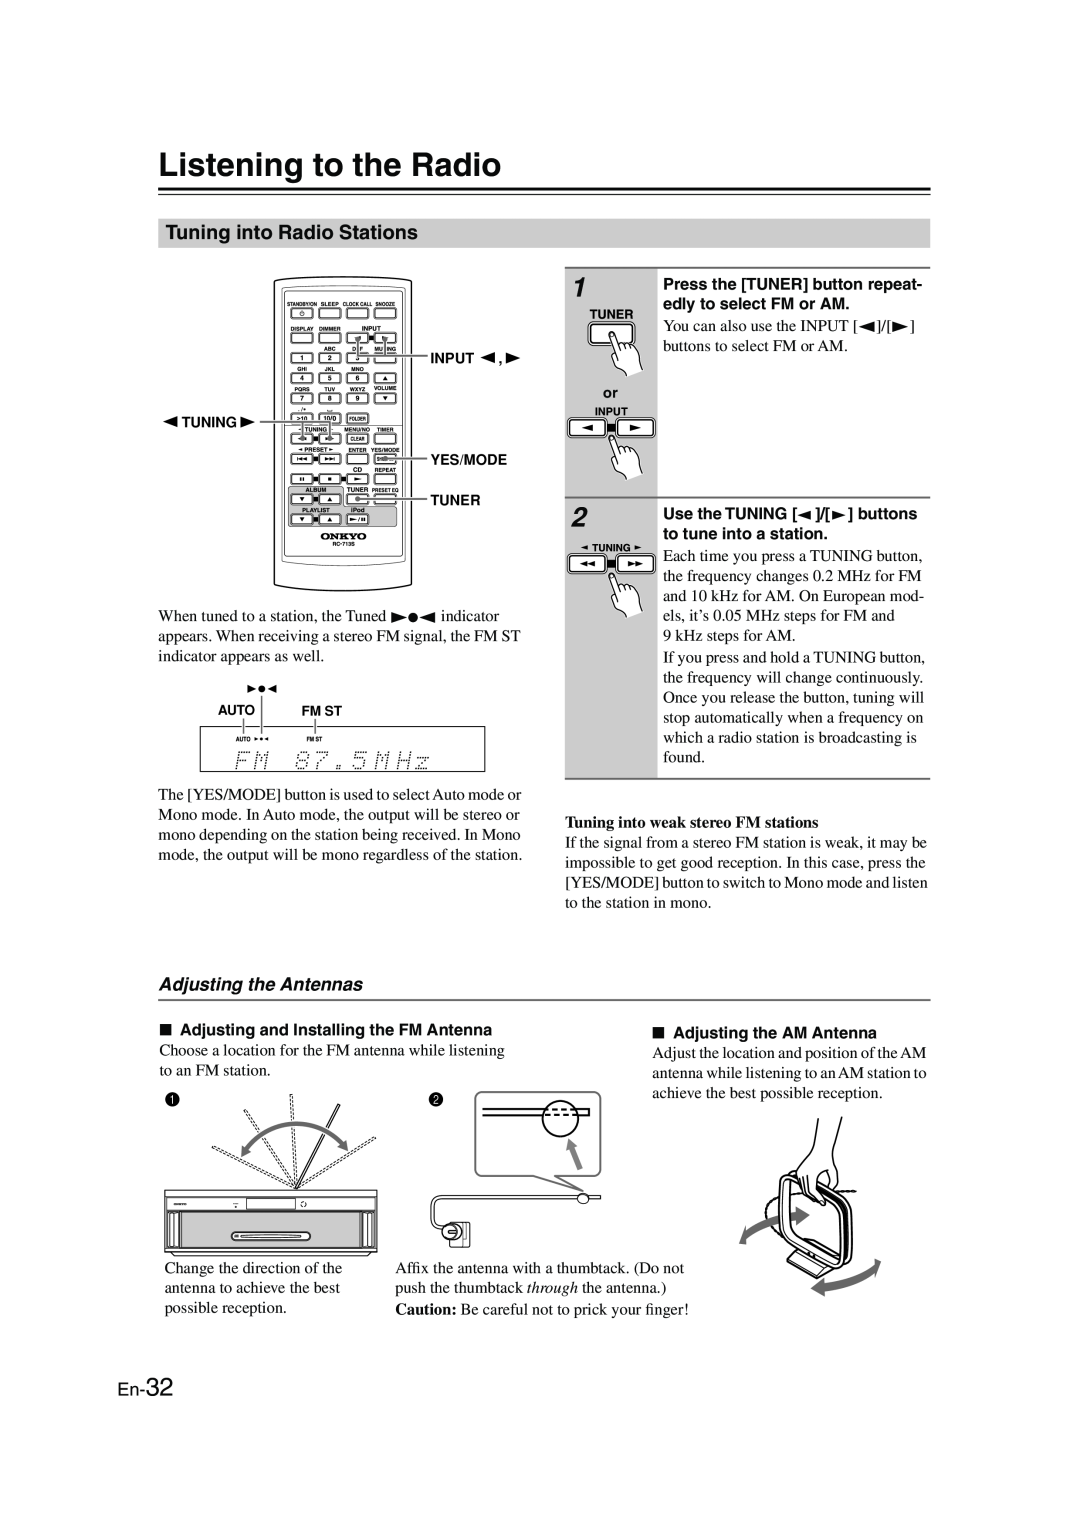 Onkyo CBX-300 instruction manual Listening to the Radio, Tuning into Radio Stations, Adjusting the Antennas, En-32 